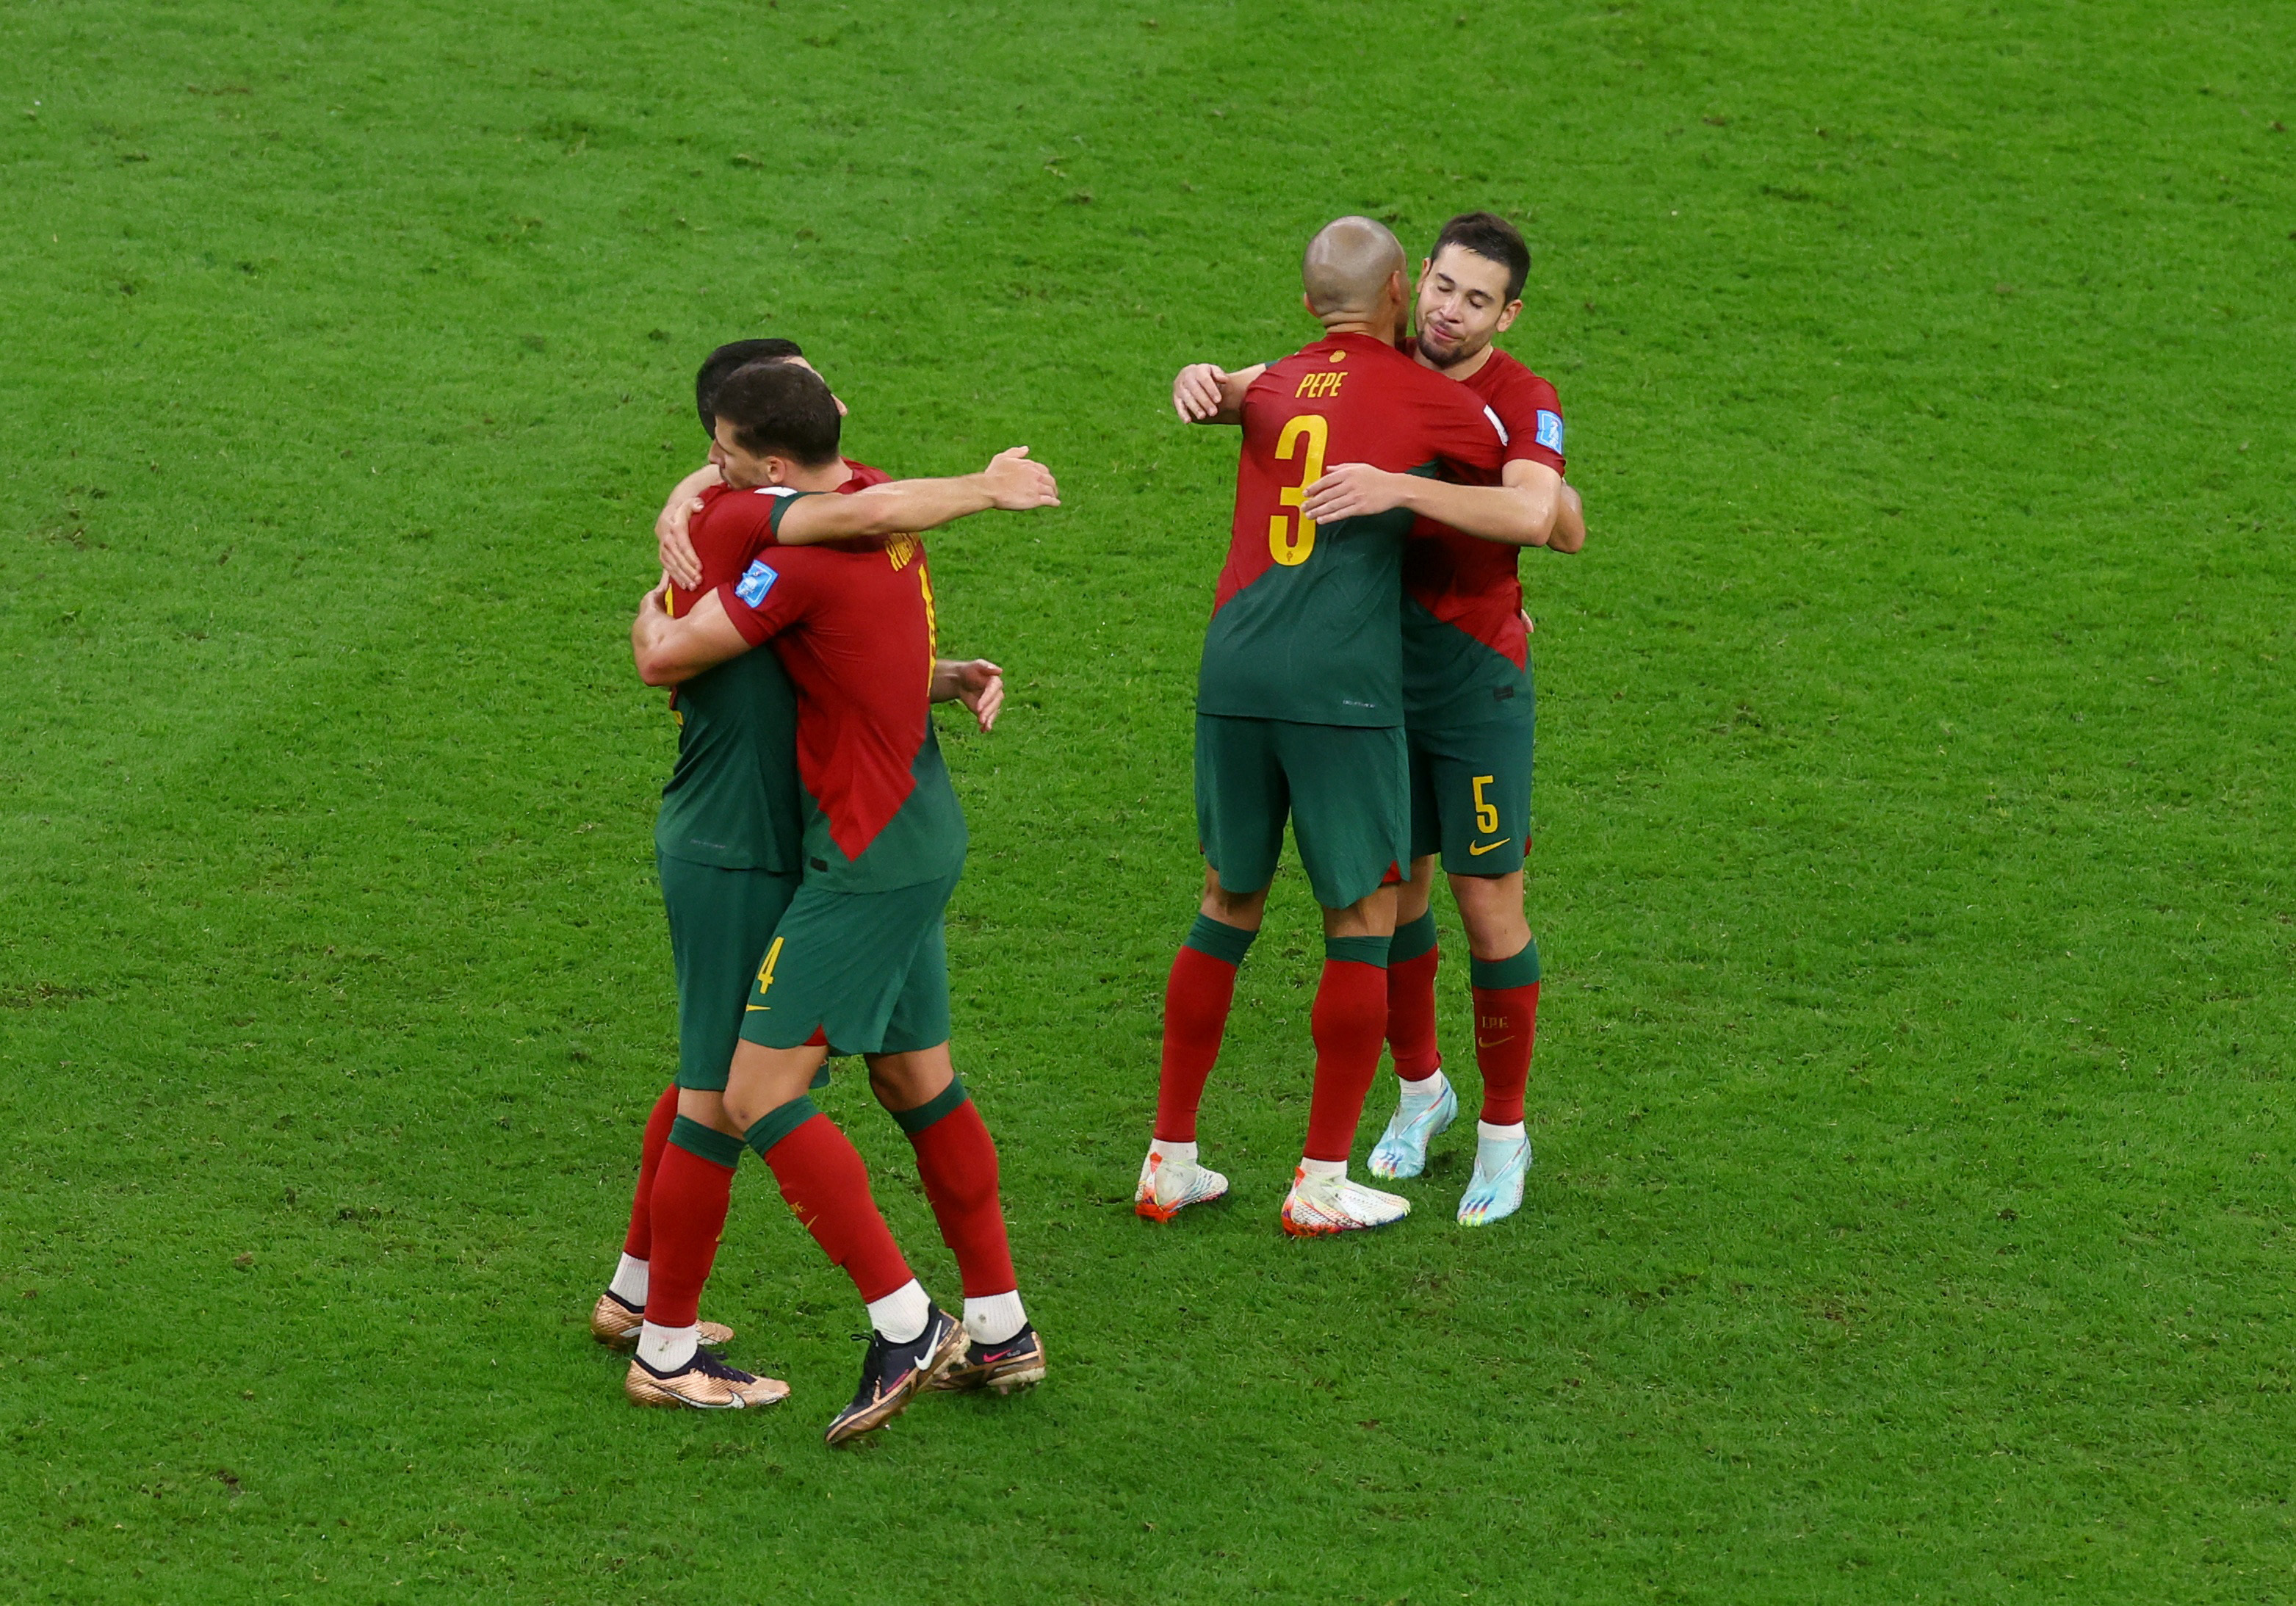 Portugal avanzó a cuartos de final en Qatar 2022 tras golear 6-1 a Suiza. Se enfrentará el sábado 10 de diciembre a Marruecos (REUTERS/Paul Childs)